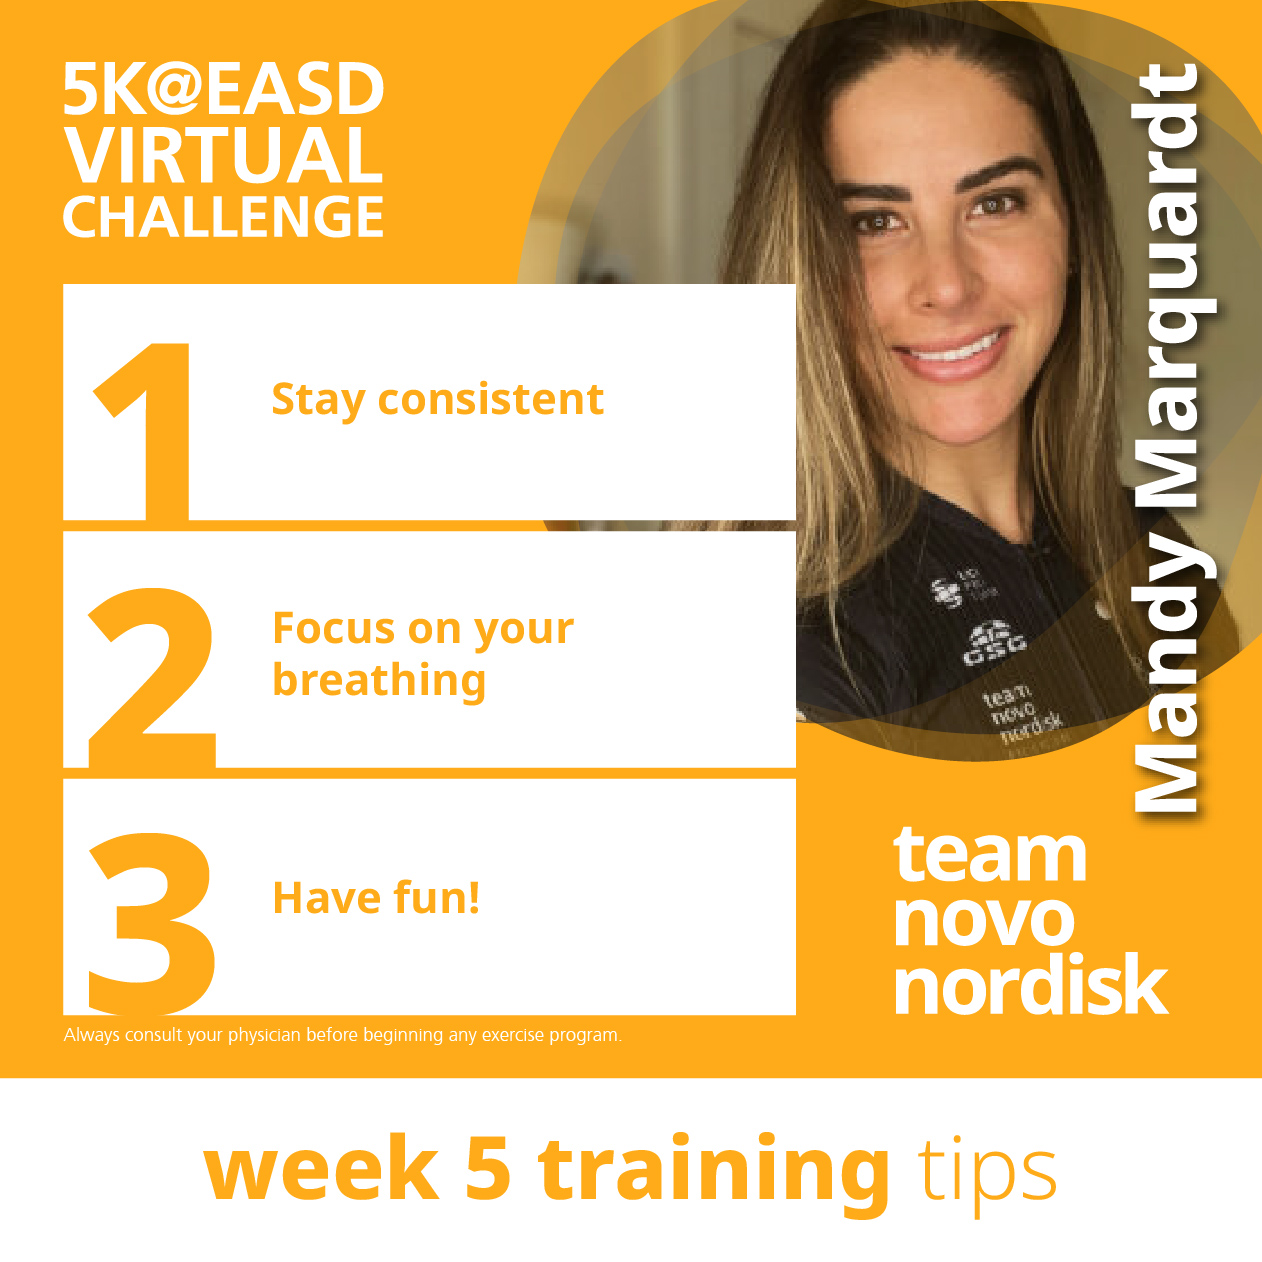 5K Training Plans Week 5 Tips